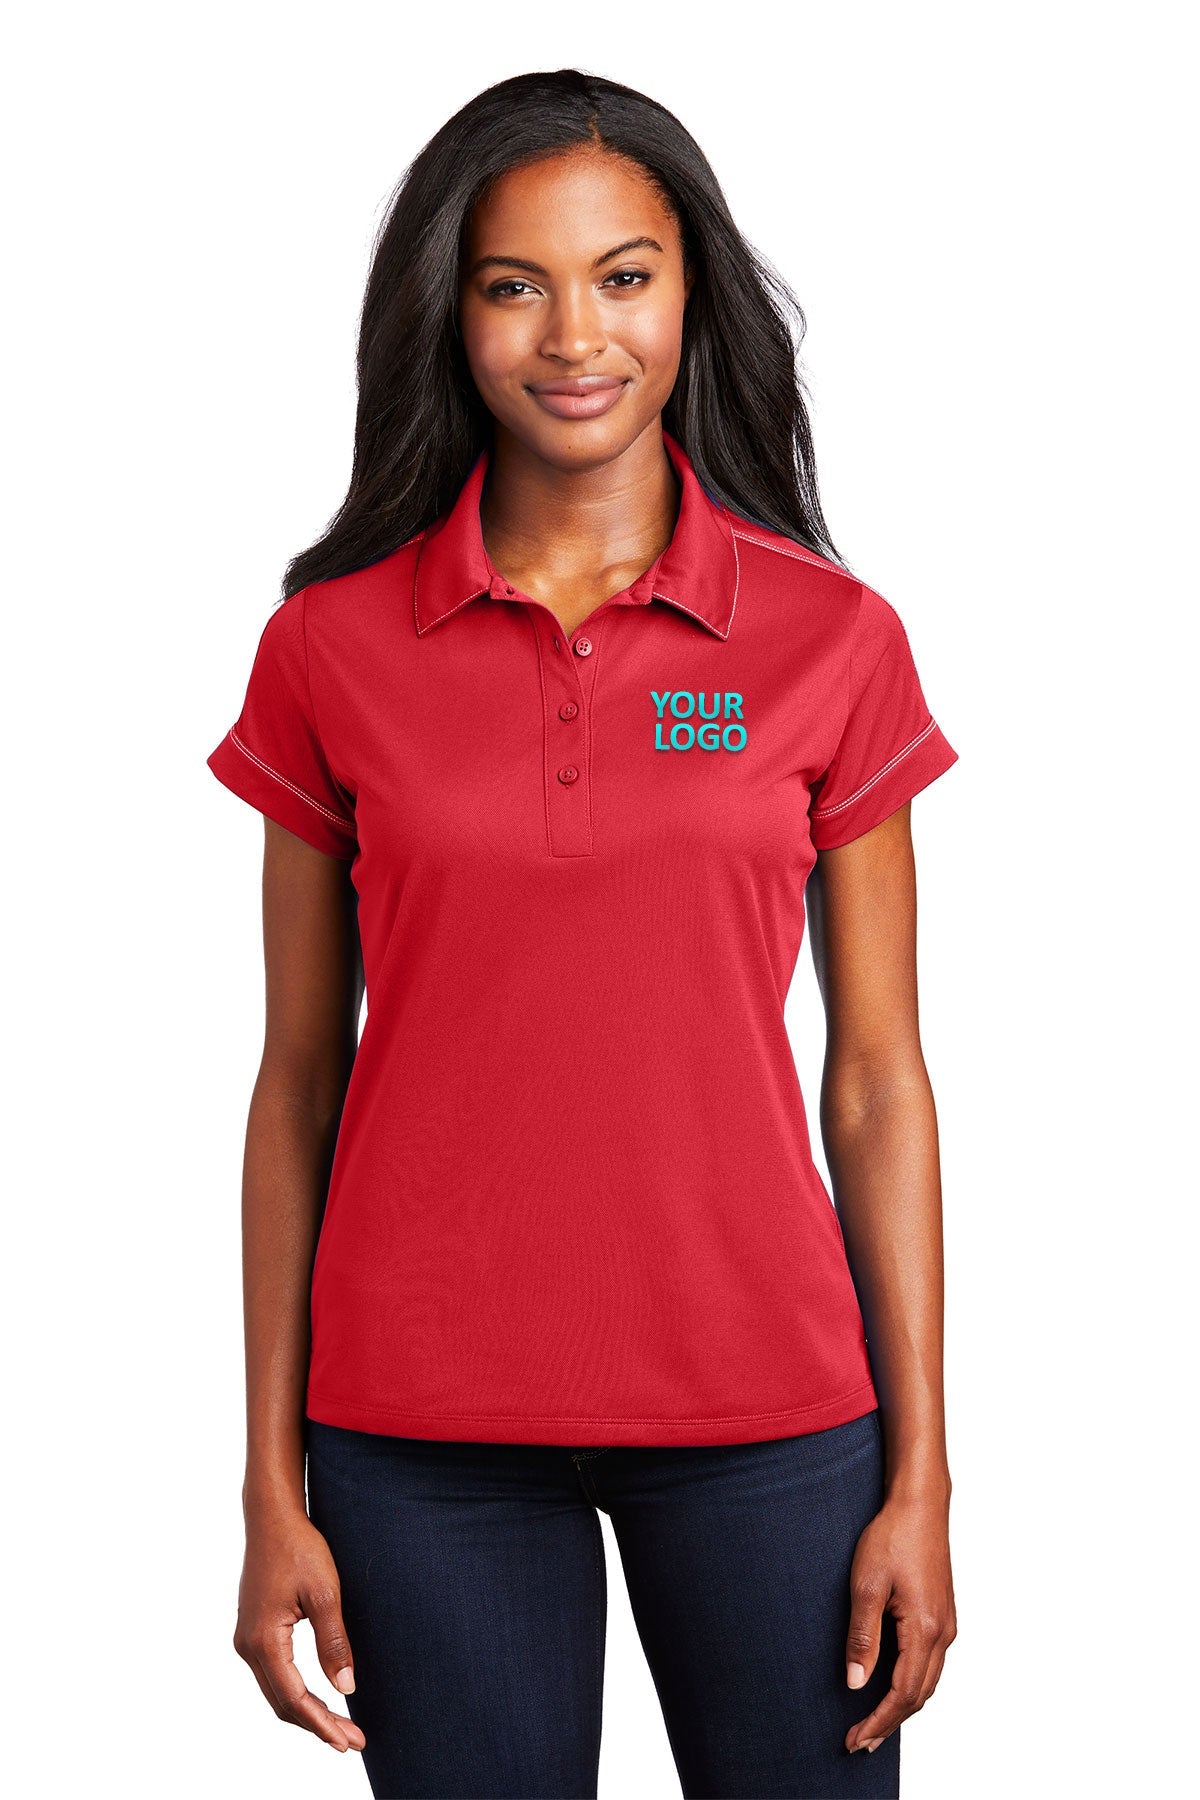 Sport-Tek True Red LST659 custom women's polo shirts